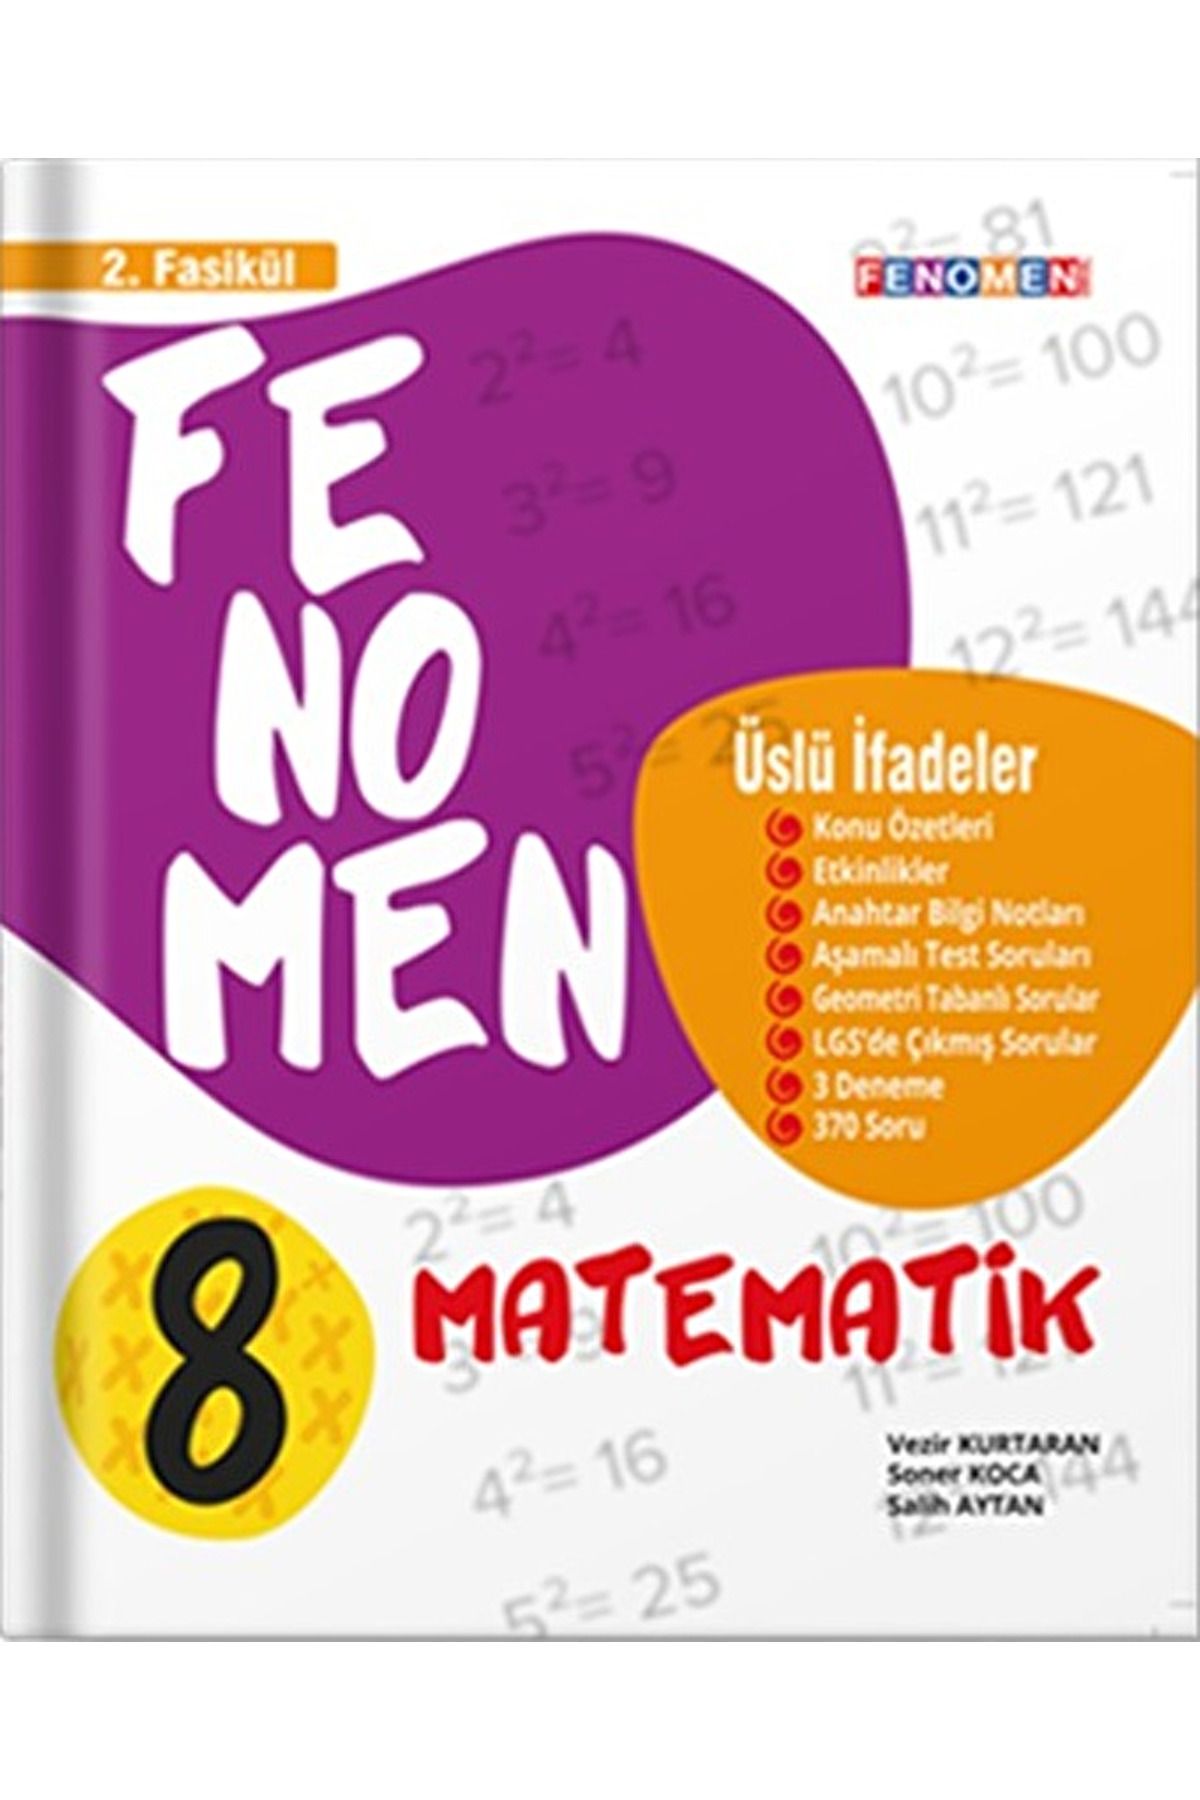 Fenomen Kitap Fenomen 8. Sınıf Matematik 2.Fasikül Üslü İfadeler / Kolektif / Fenomen Kitap / 9786257174756